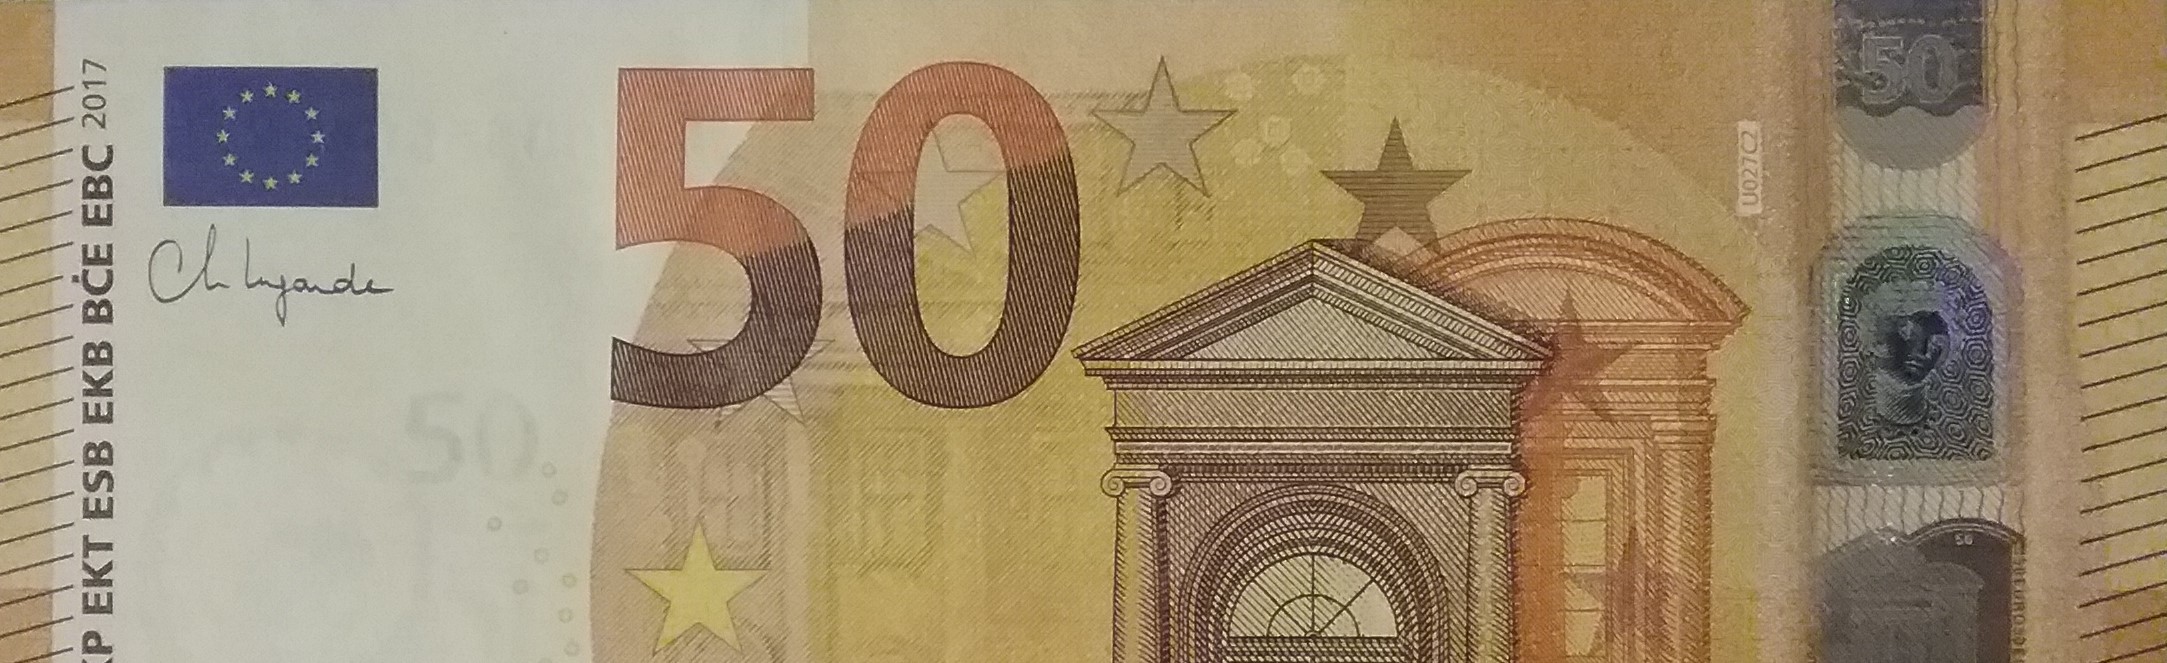 50 U U 027 Draghi - Collection EUROPE